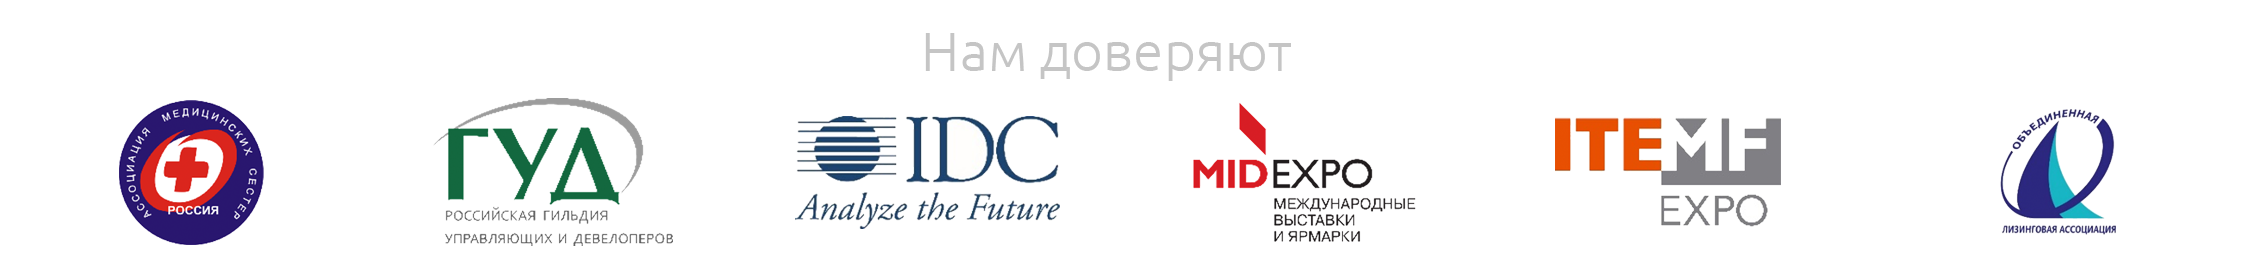 Logos_russia